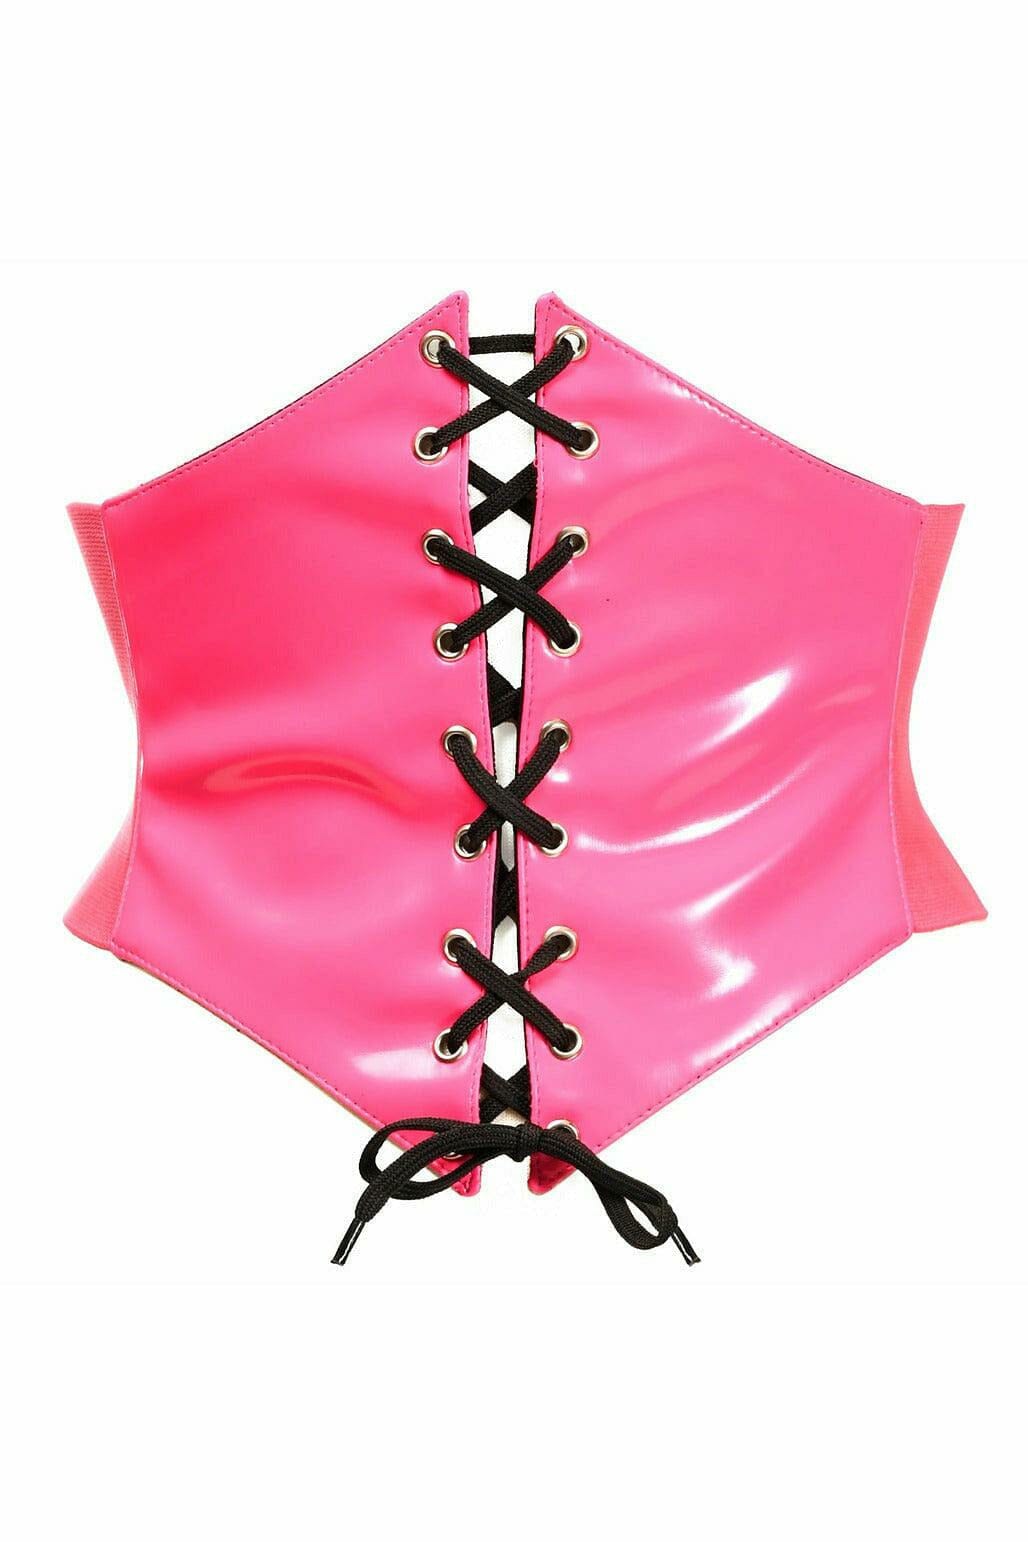 Lavish Hot Pink Patent Corset Belt Cincher-Corset Belts-Daisy Corsets-Pink-S-SEXYSHOES.COM